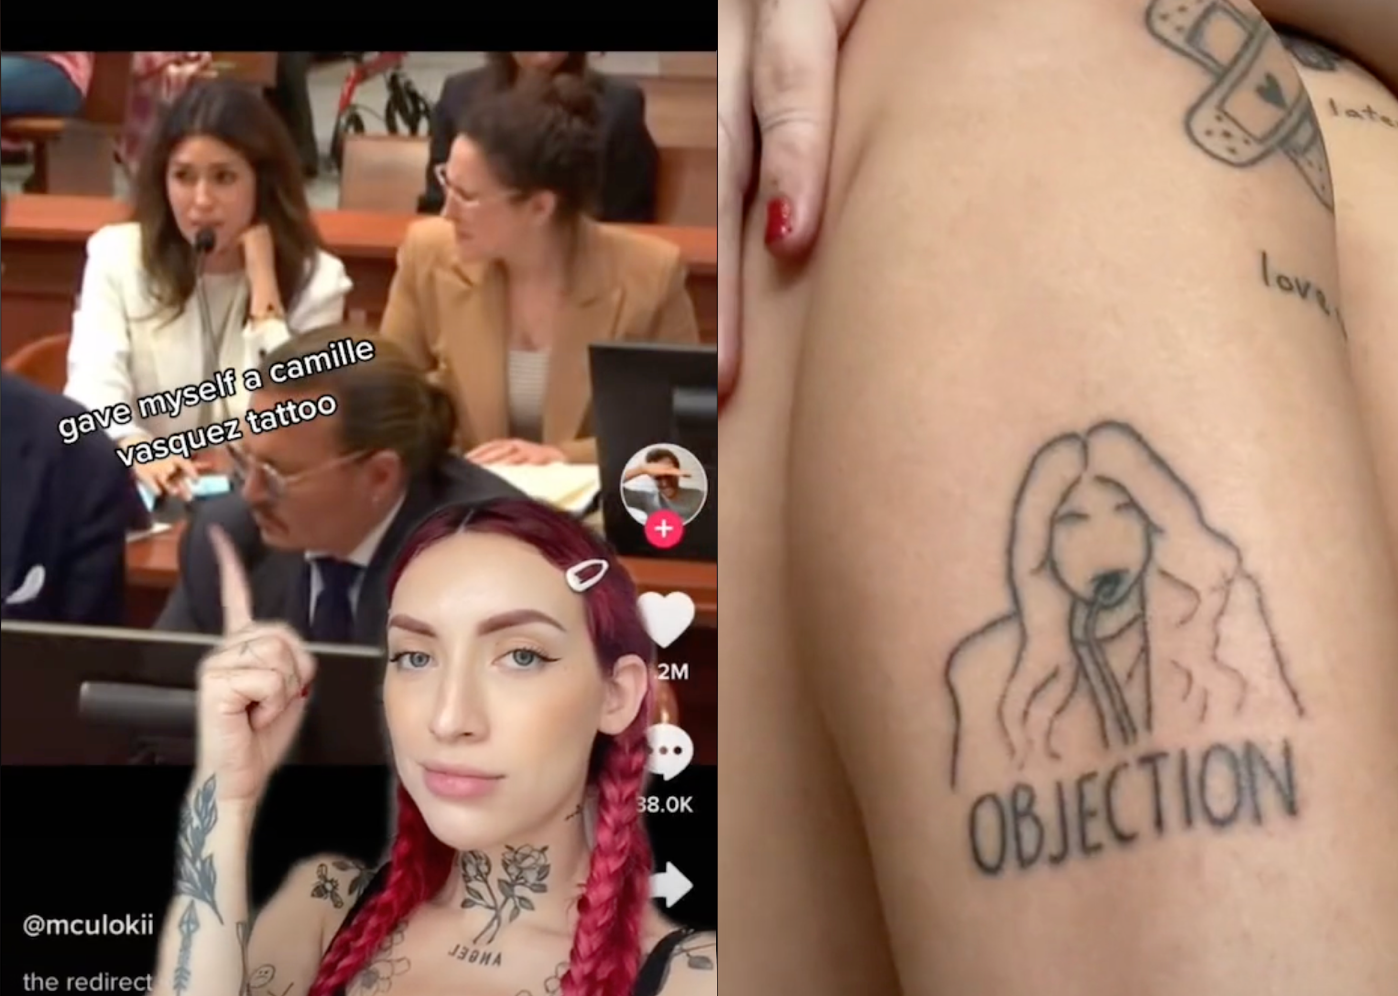 Watch Blac Chyna Remove Her 'Demonic' Tattoo